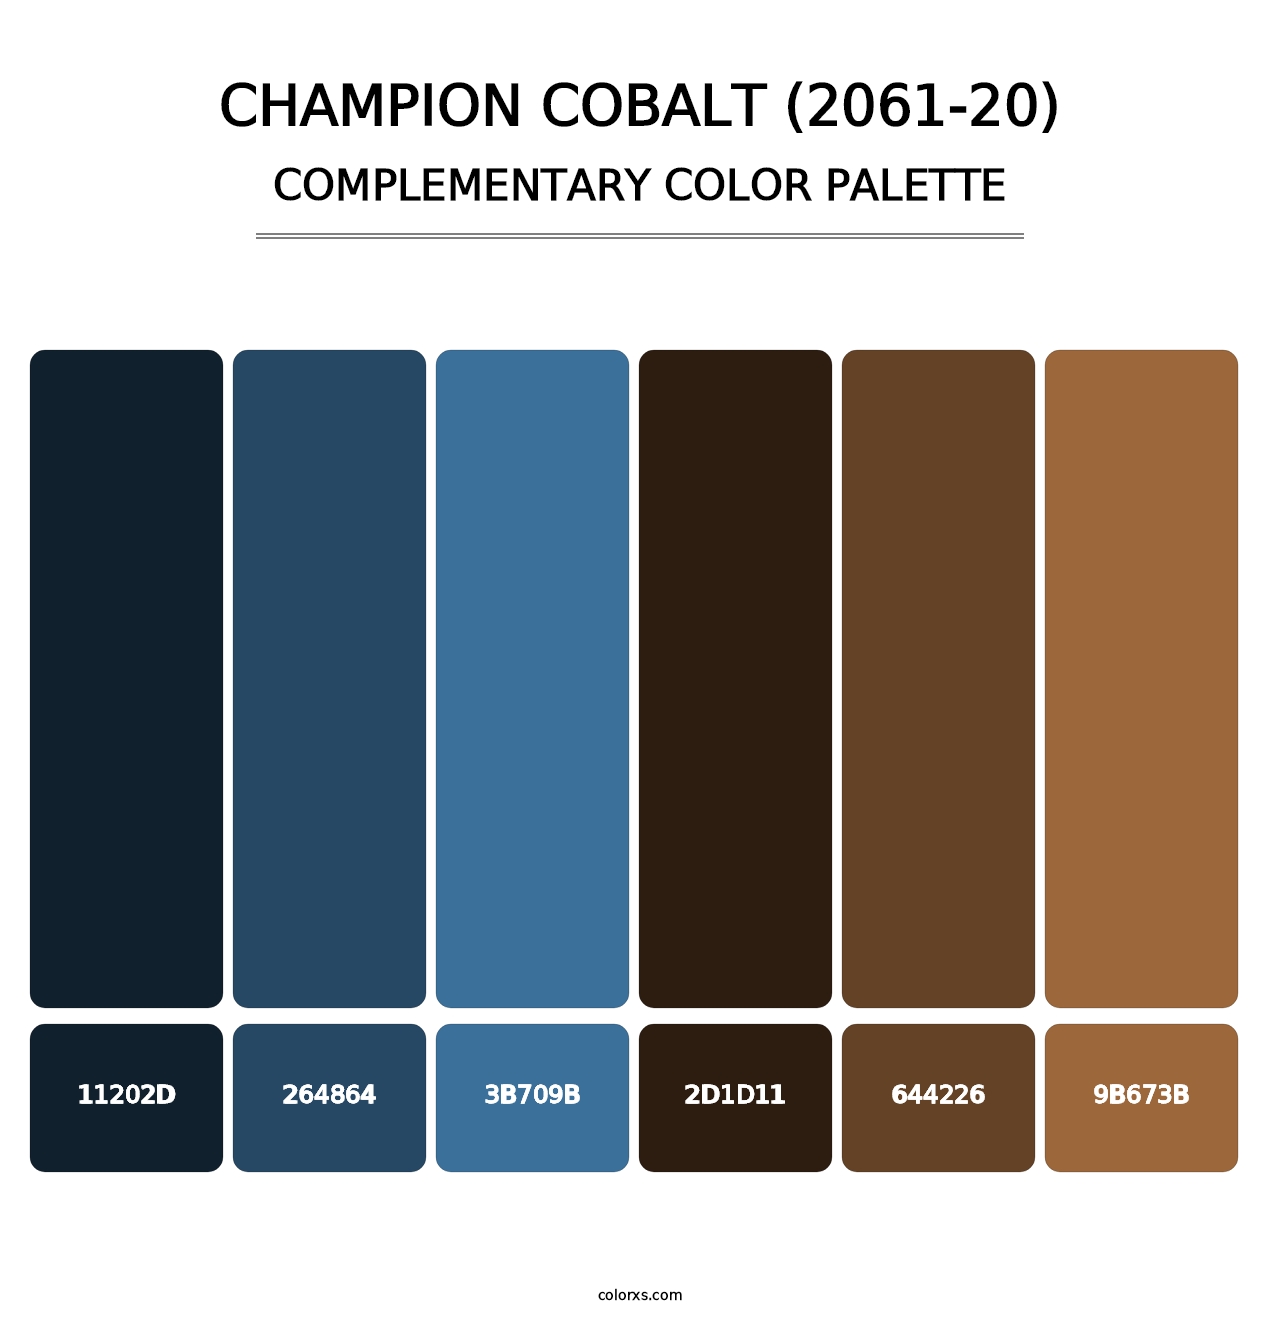 Champion Cobalt (2061-20) - Complementary Color Palette